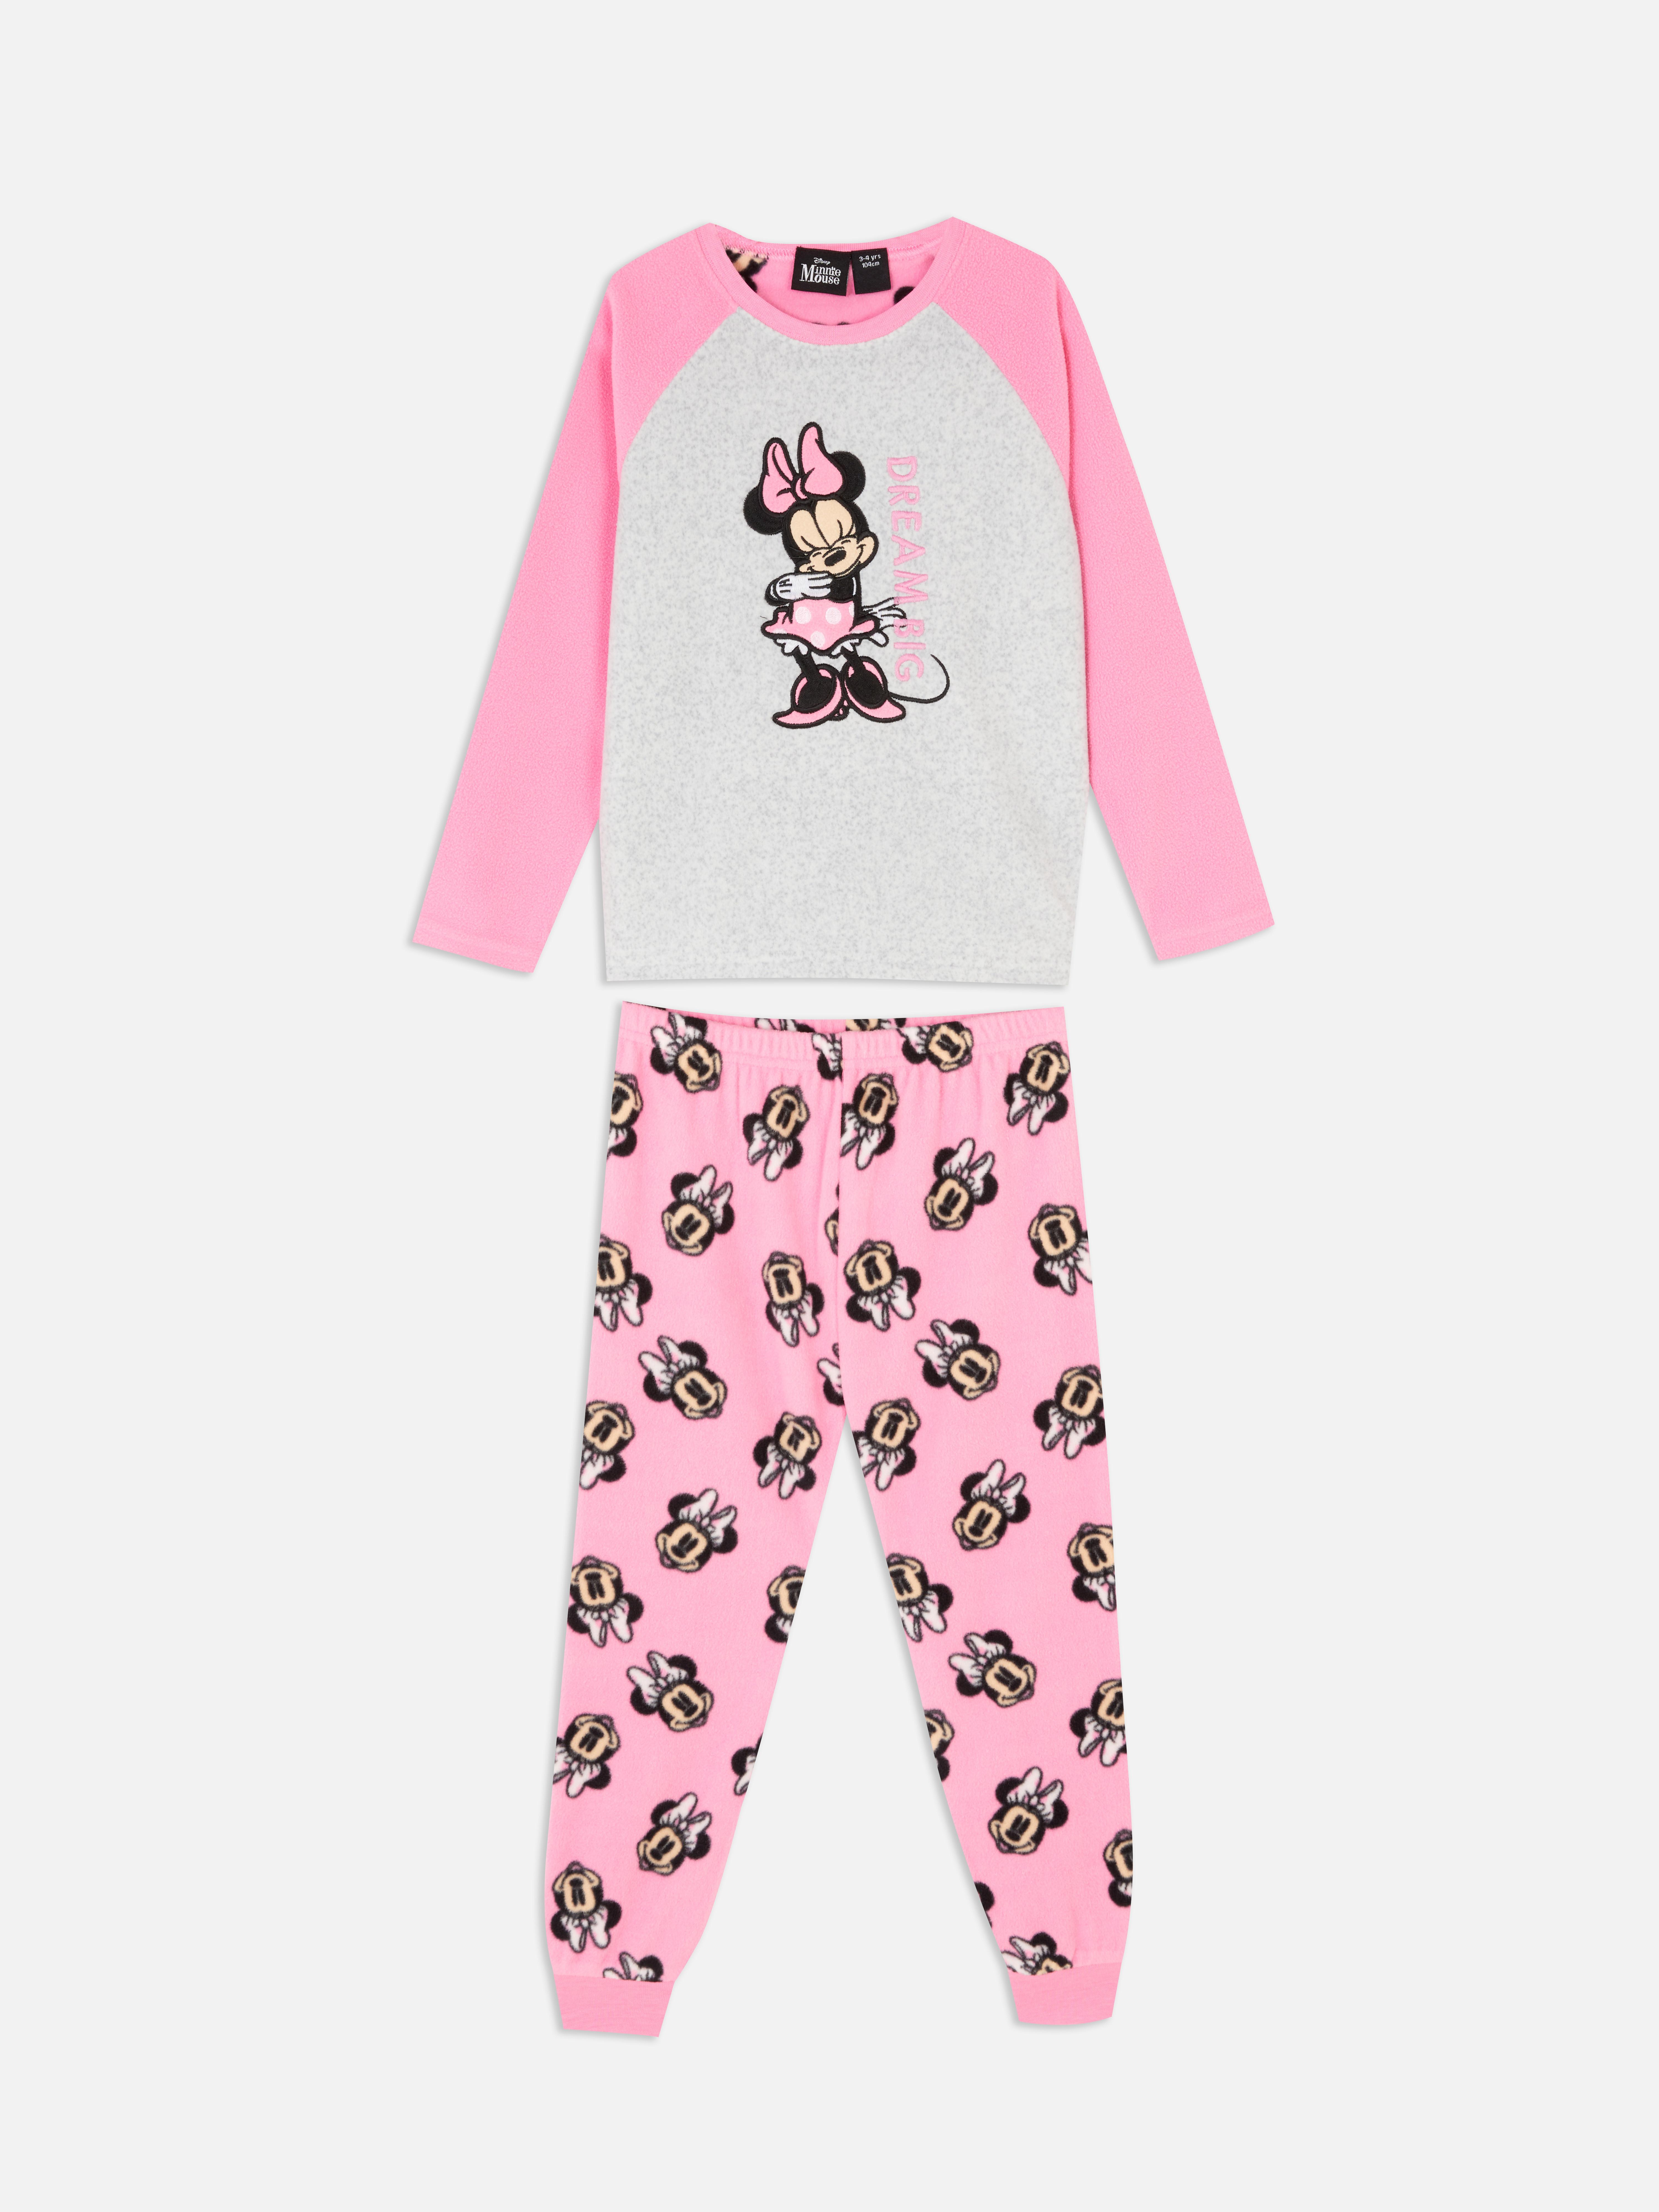 Disney’s Minnie Mouse Fleece Pajama Set